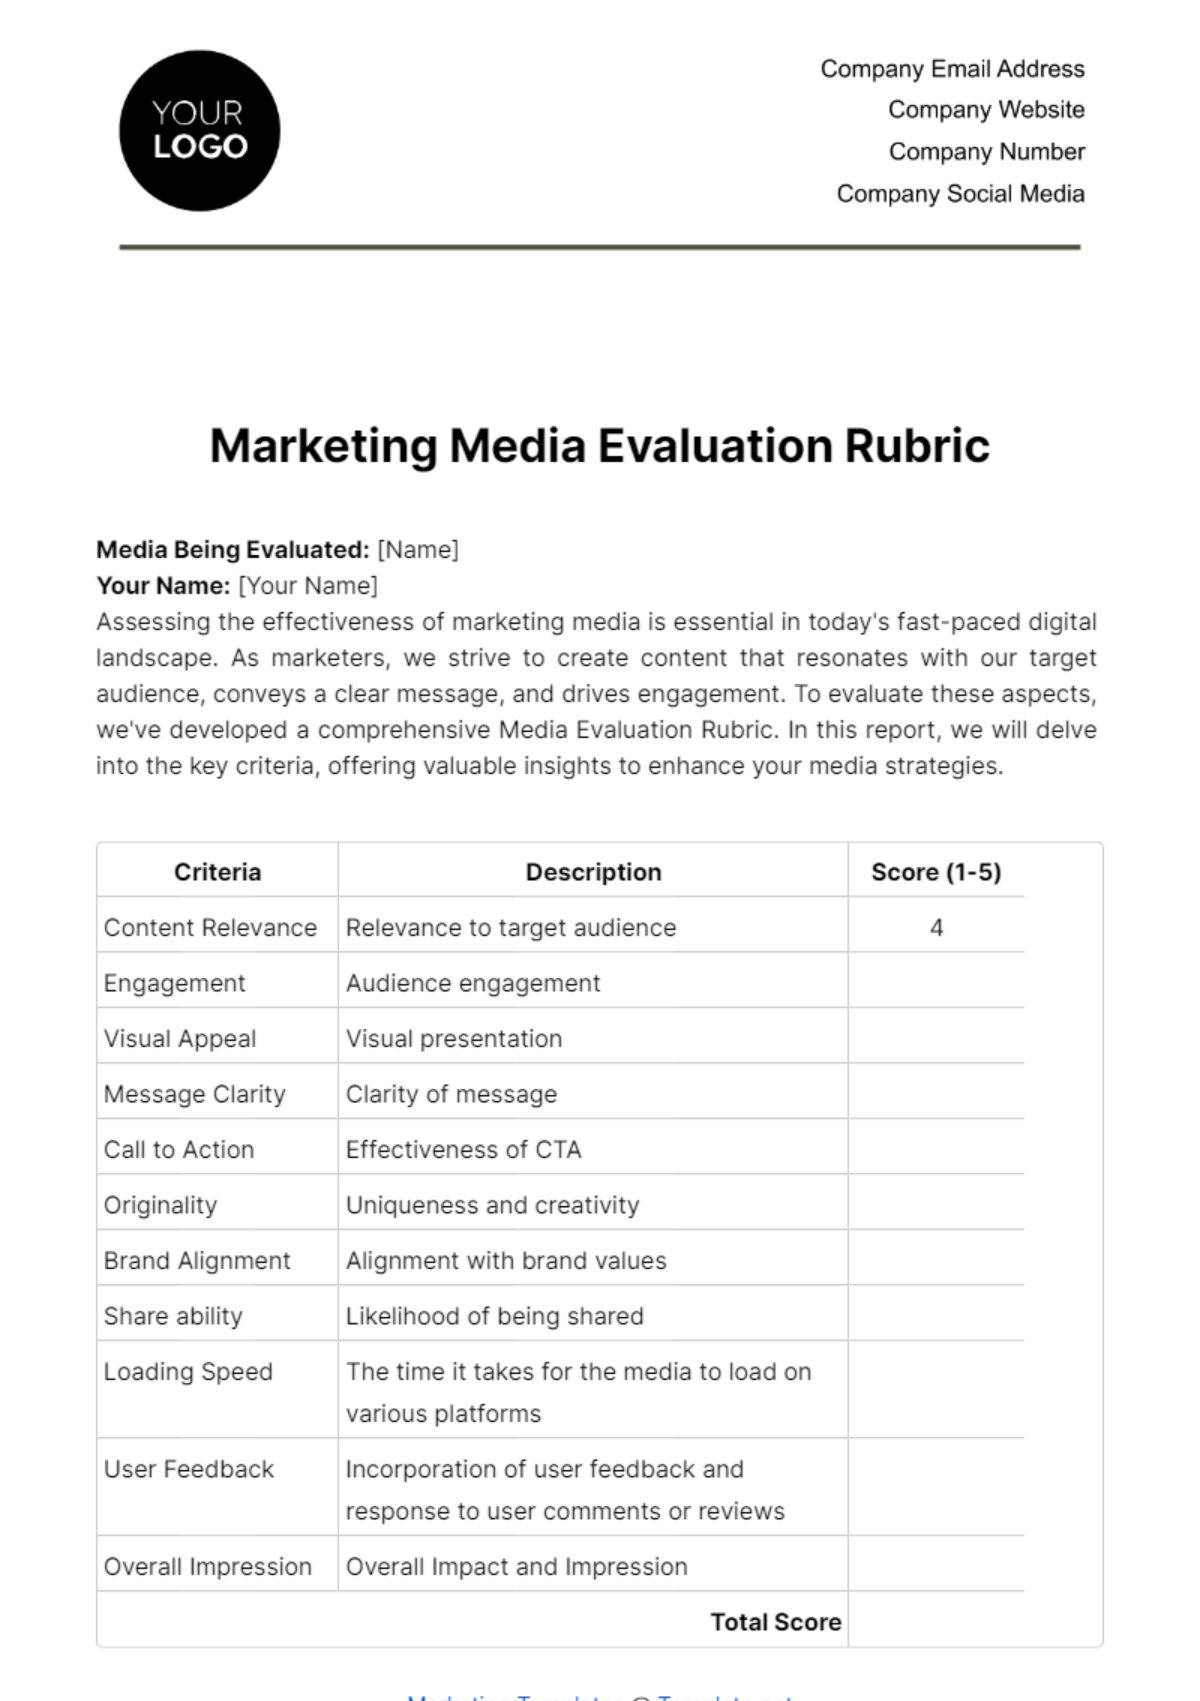 Free Marketing Media Evaluation Rubric Template